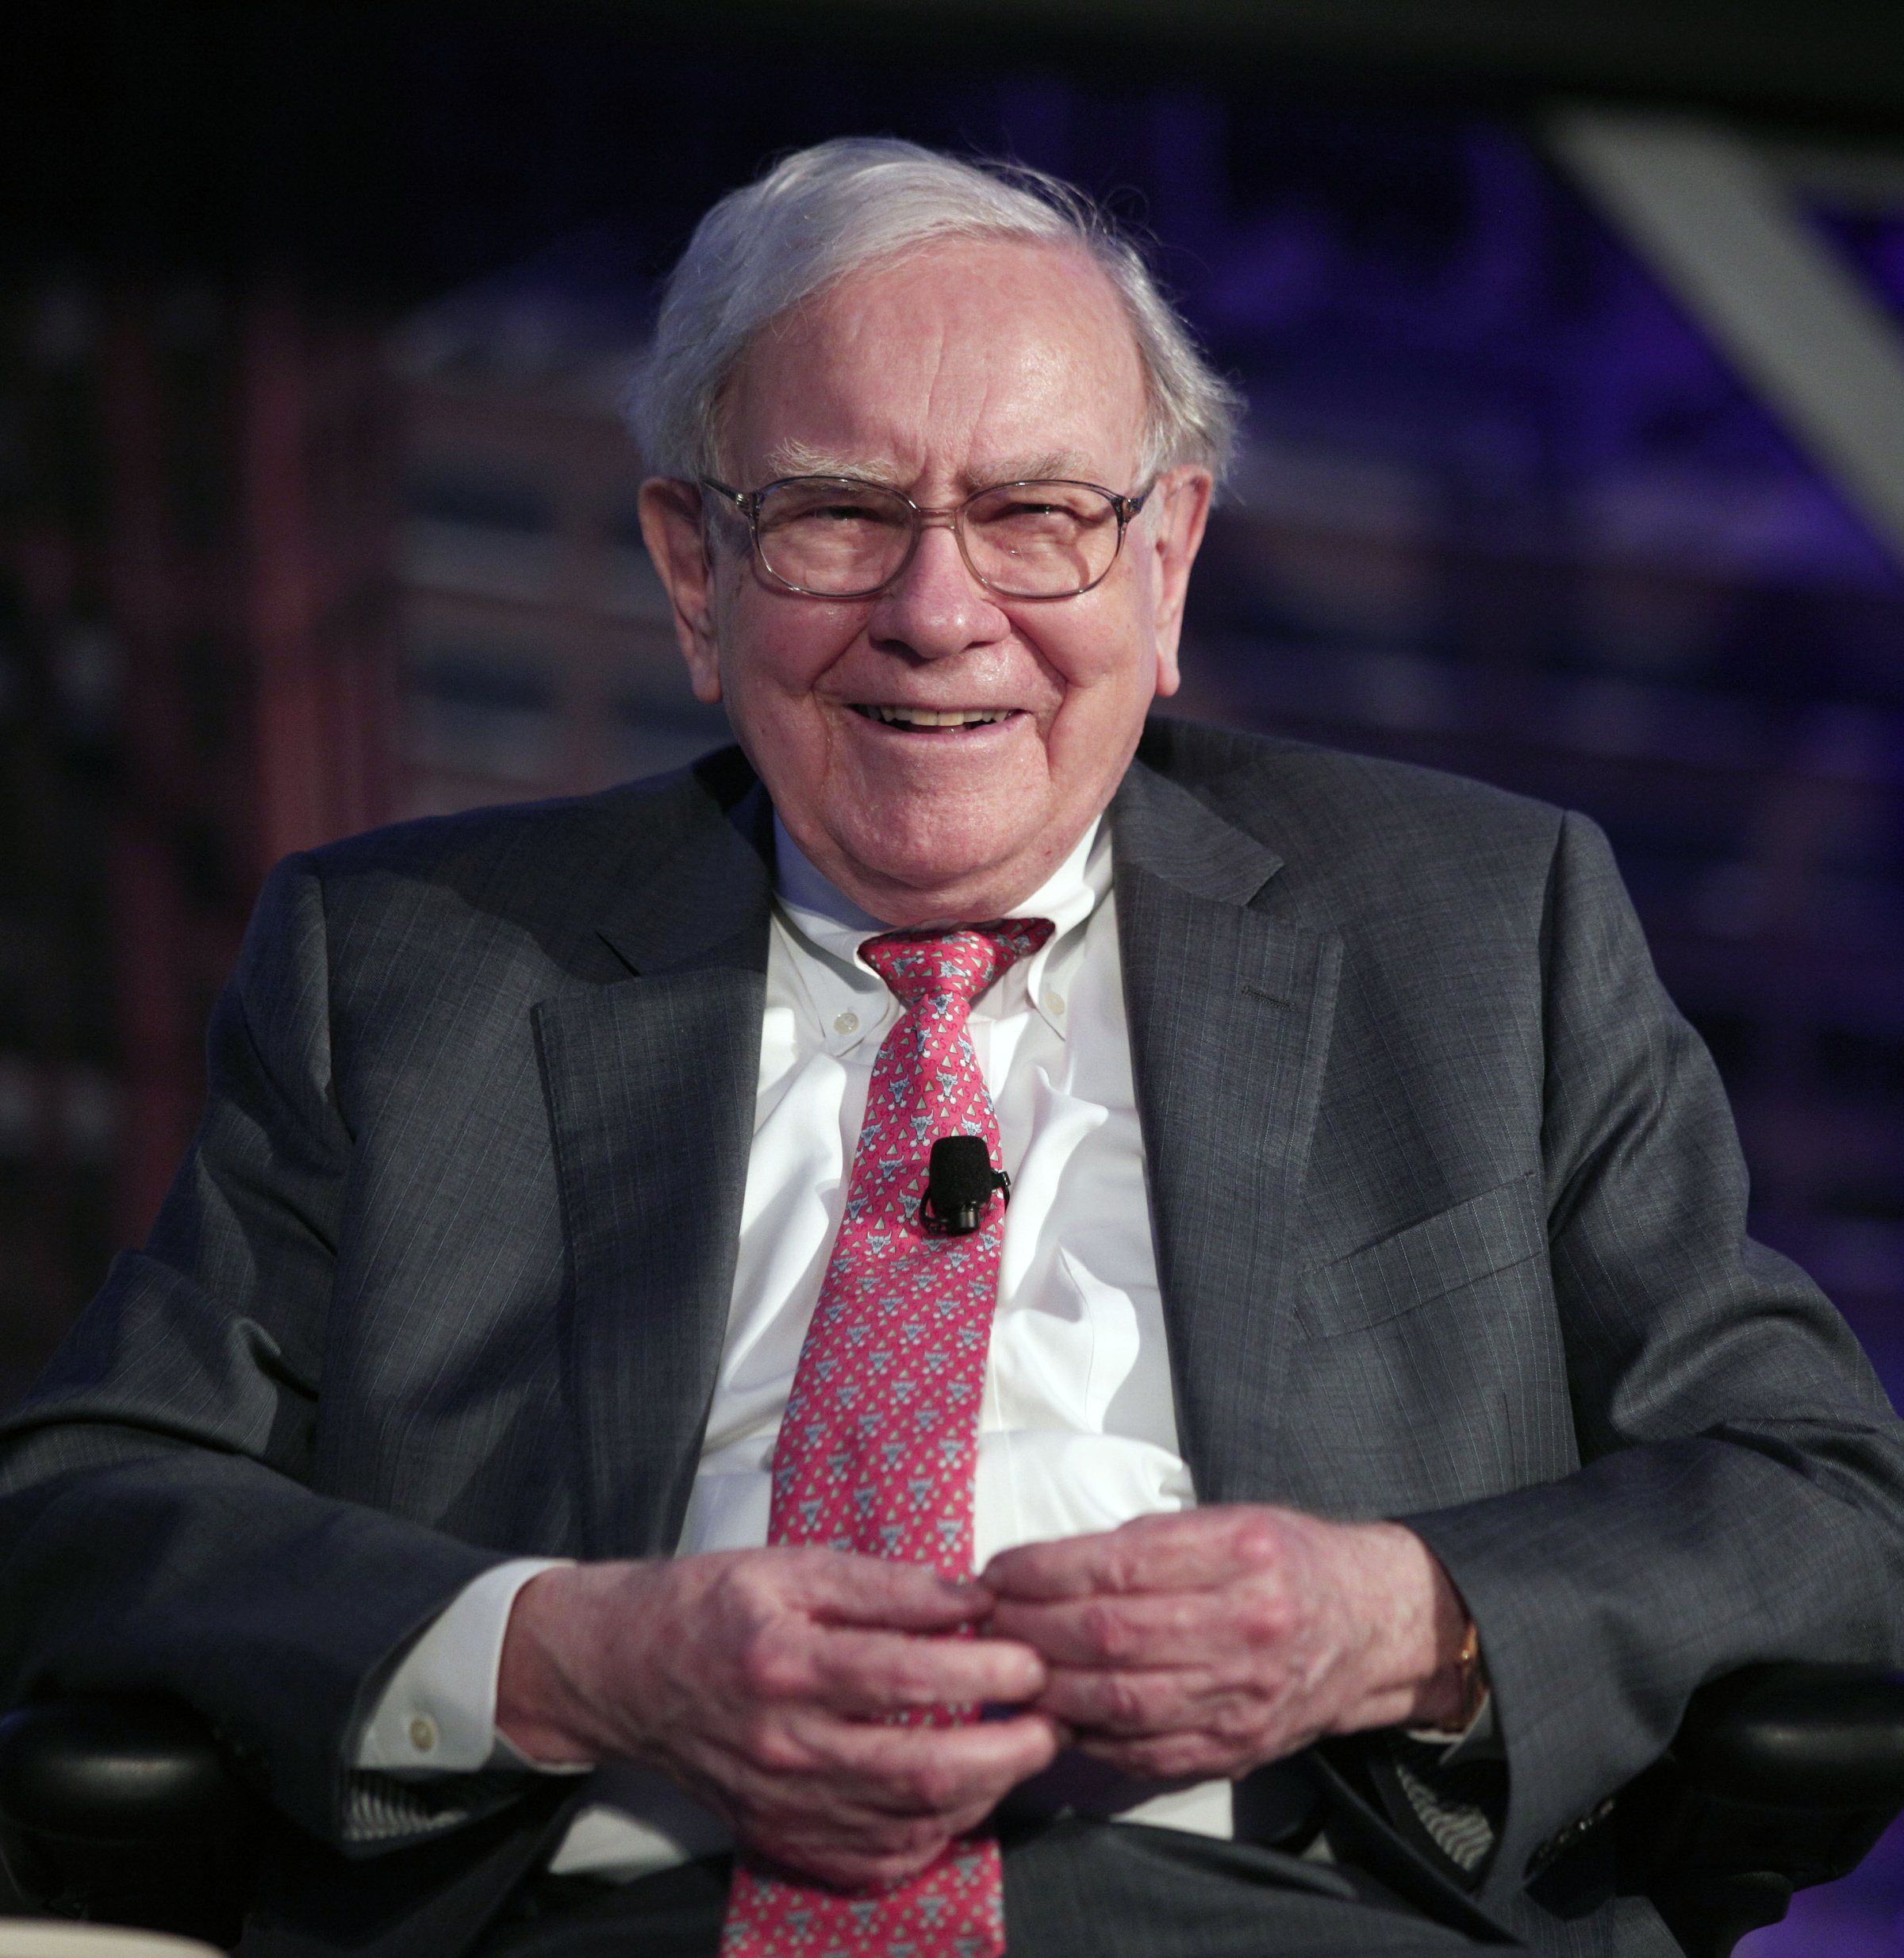 Billionaire investor Warren Buffett speaks at an event on Sept. 18, 2014 in Detroit, Michigan.